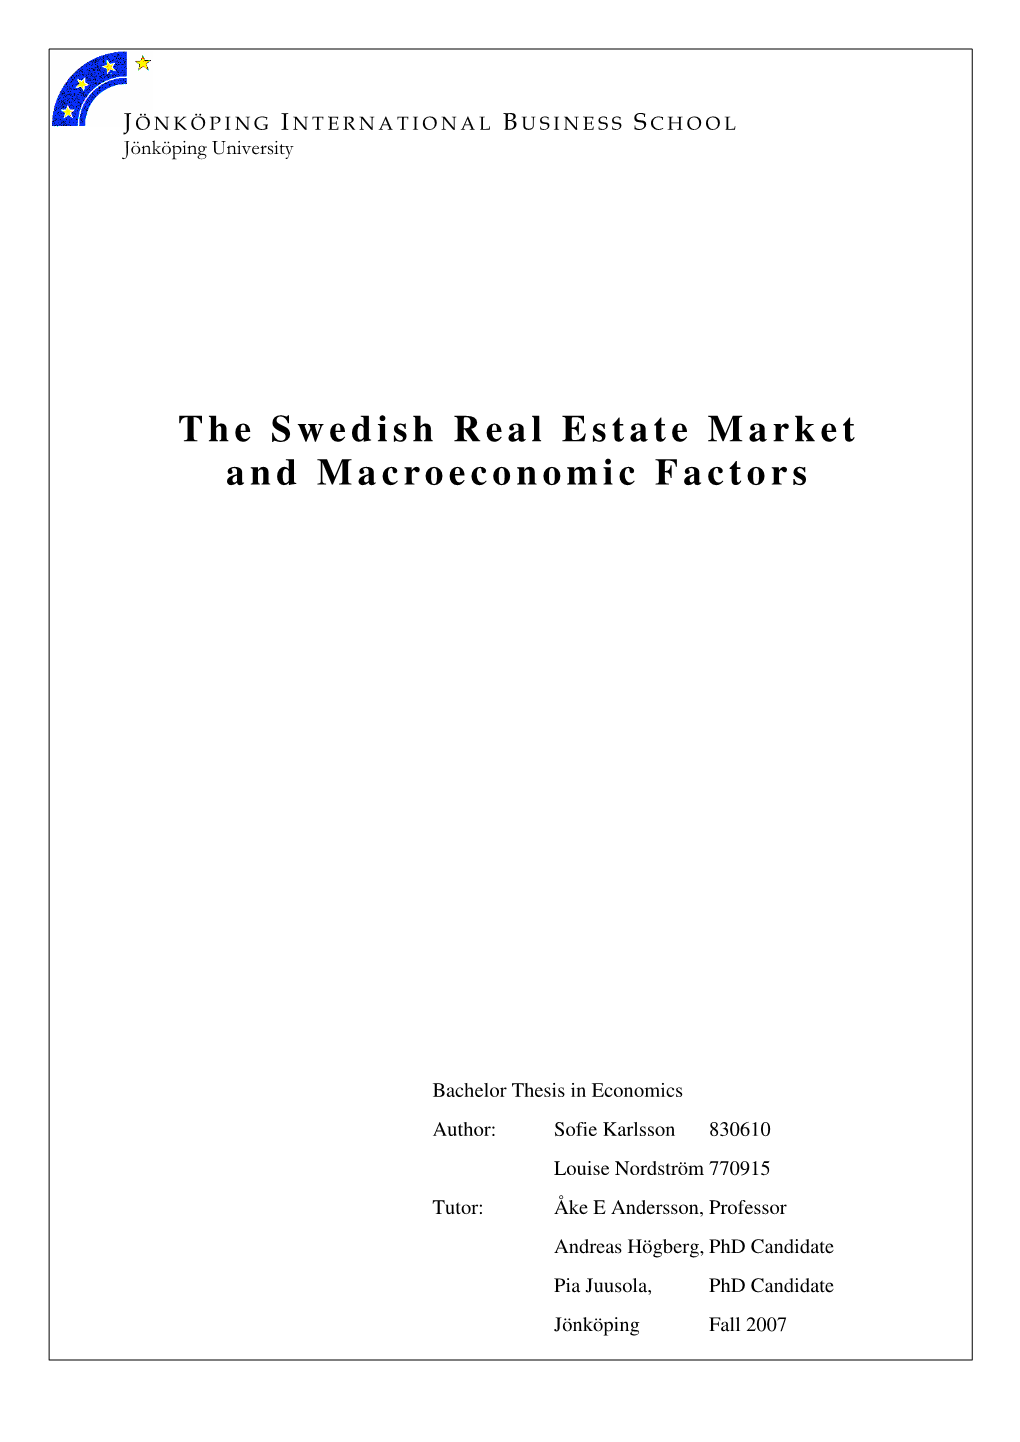 The Swedish Real Estate Market and Macroeconomic Factors